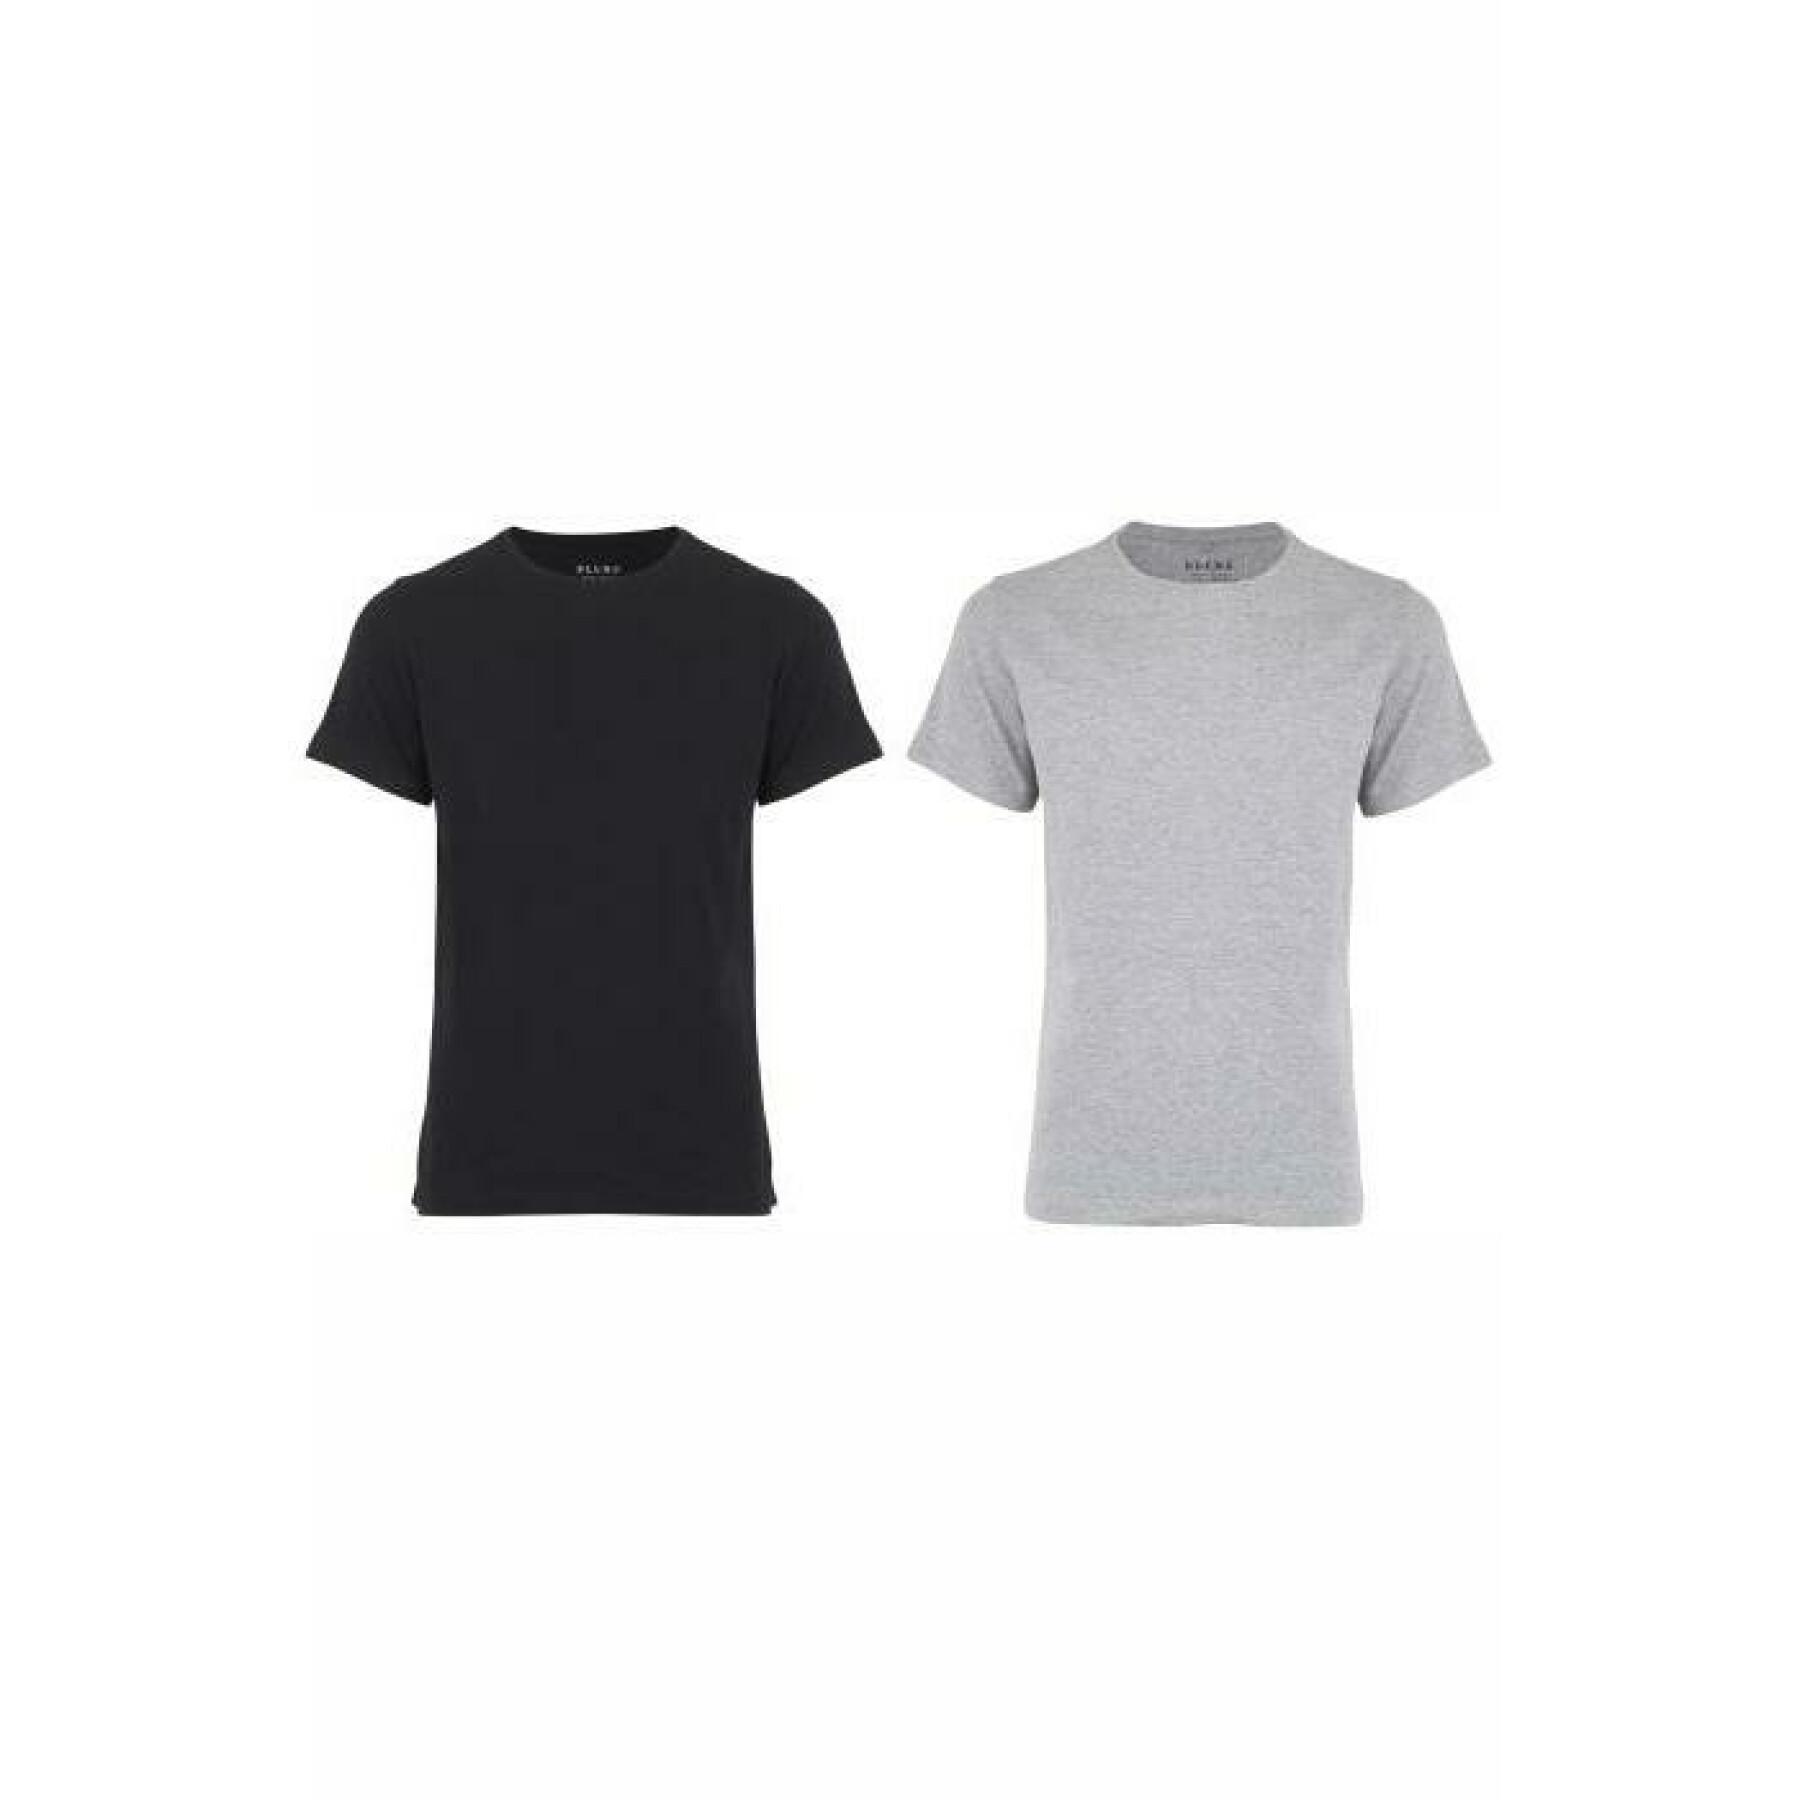 Set of 2 round neck bhdinton Blend t-shirts